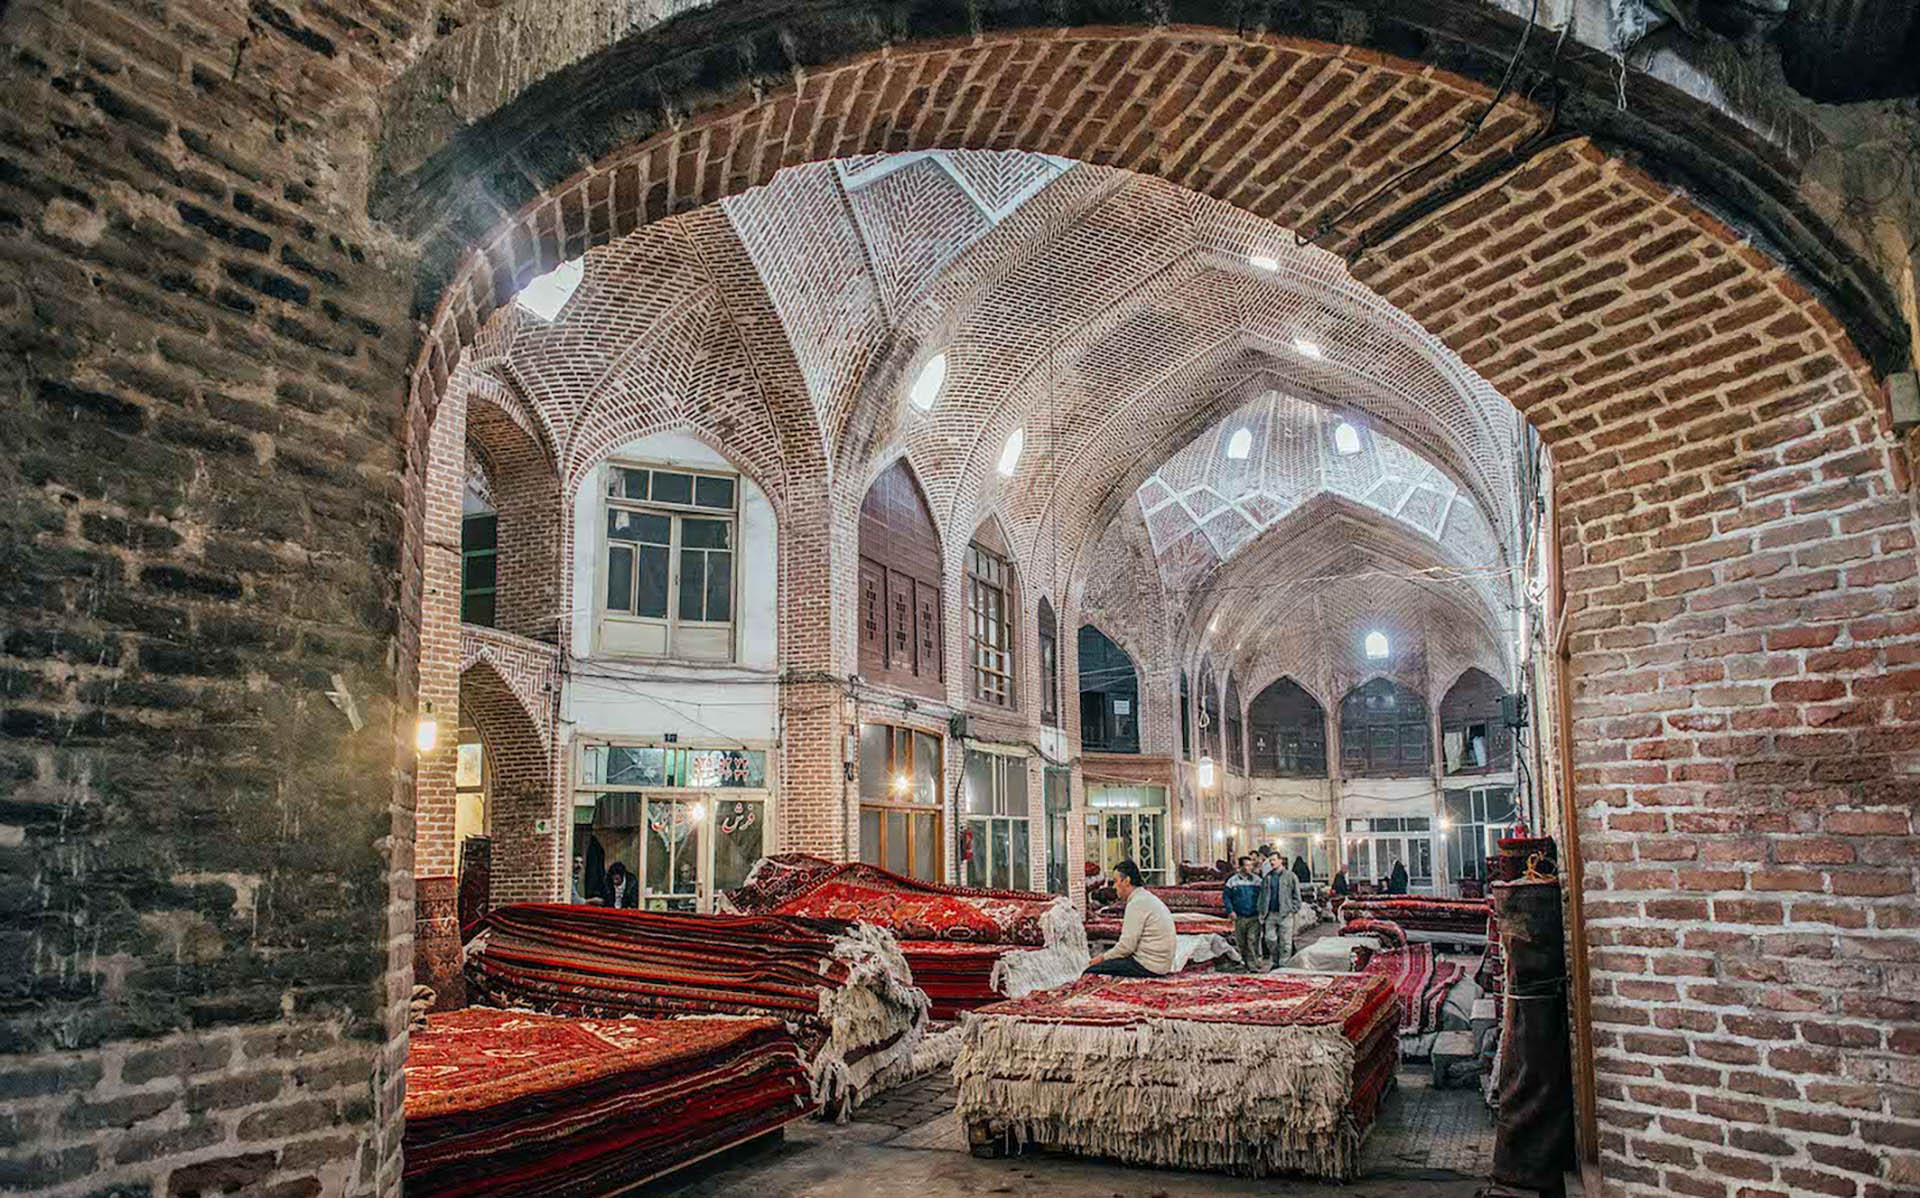 Urmia Indoor Market: A Vibrant Bazaar in the Heart of Iran